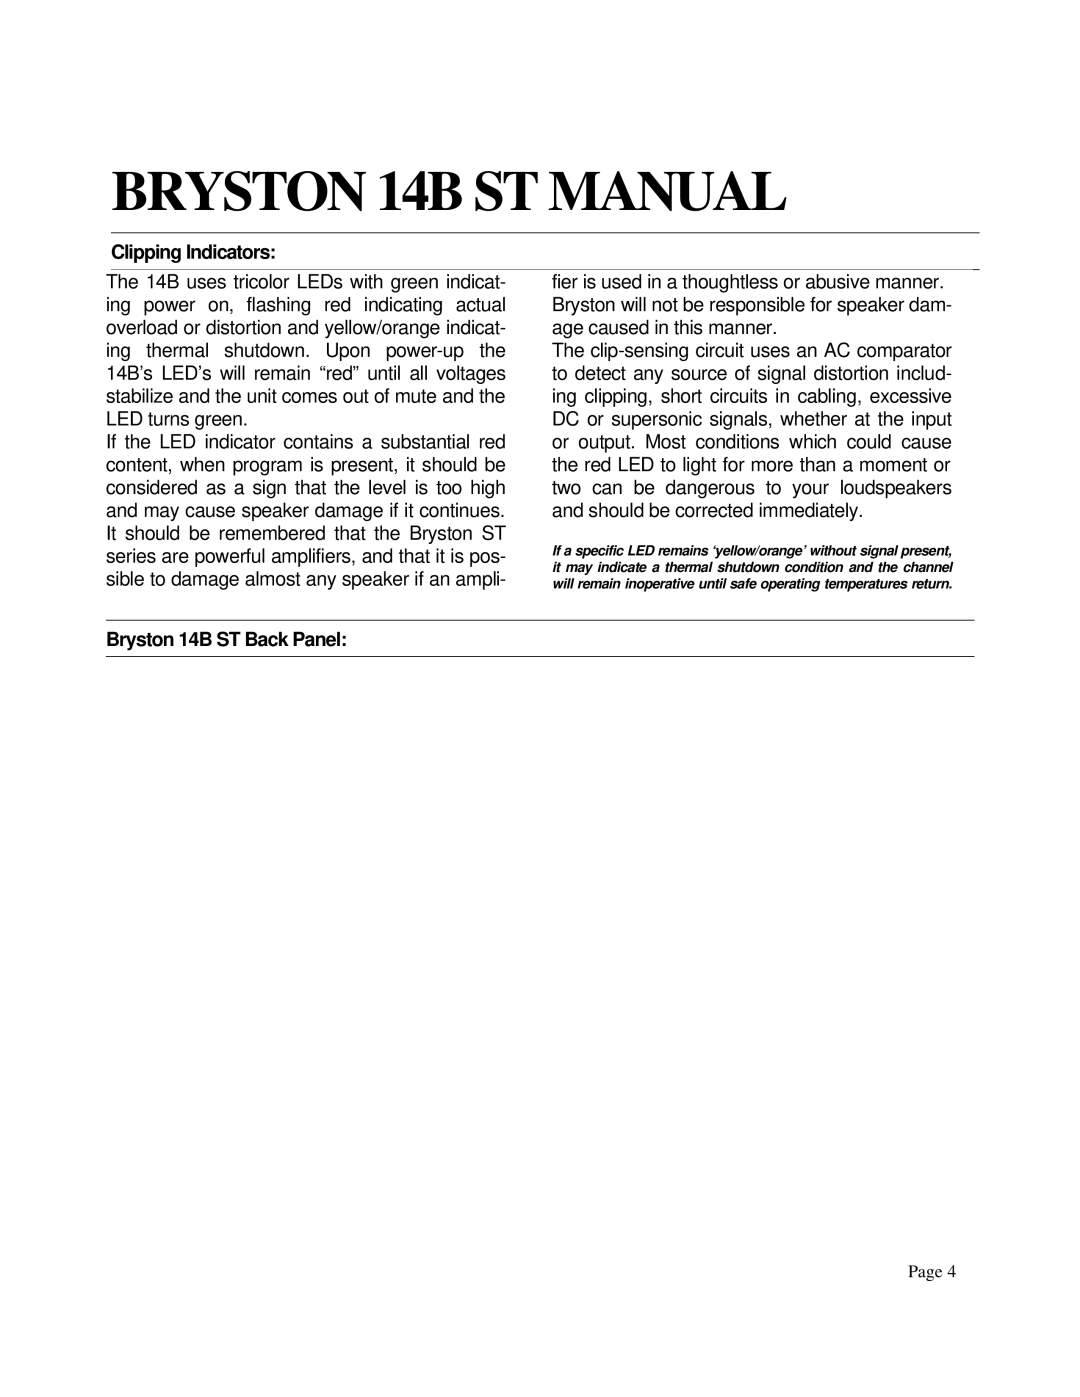 Bryston l14BST owner manual BRYSTON 14B ST MANUAL, Clipping Indicators, Bryston 14B ST Back Panel 